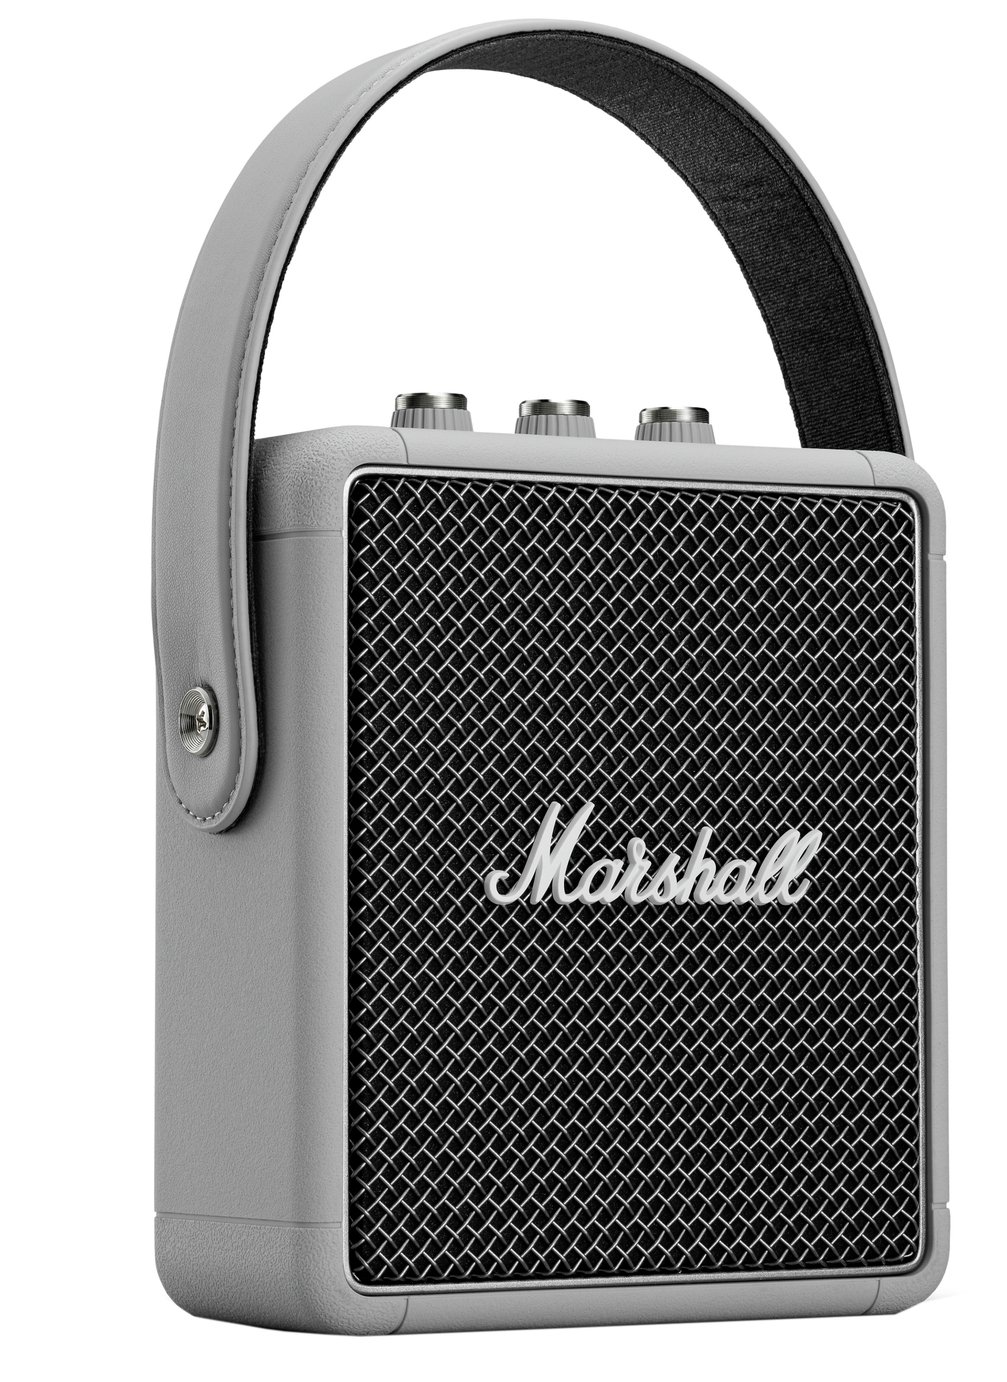 Marshall Stockwell II Wireless Speaker - Grey